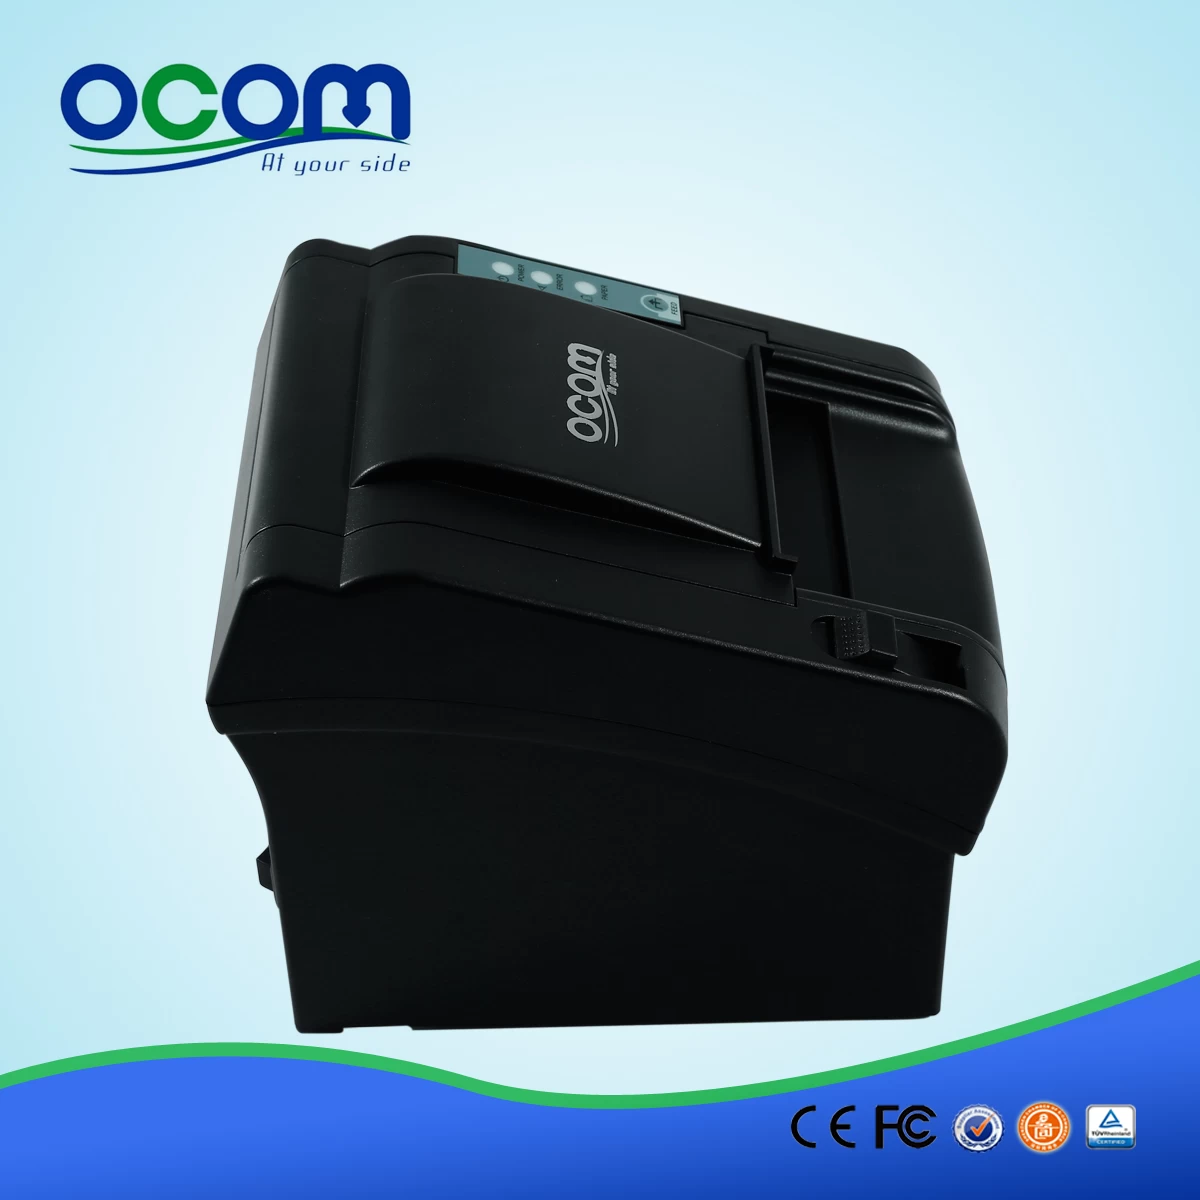 OCPP-802: on sale pos receipt printer thermal, direct thermal printer price